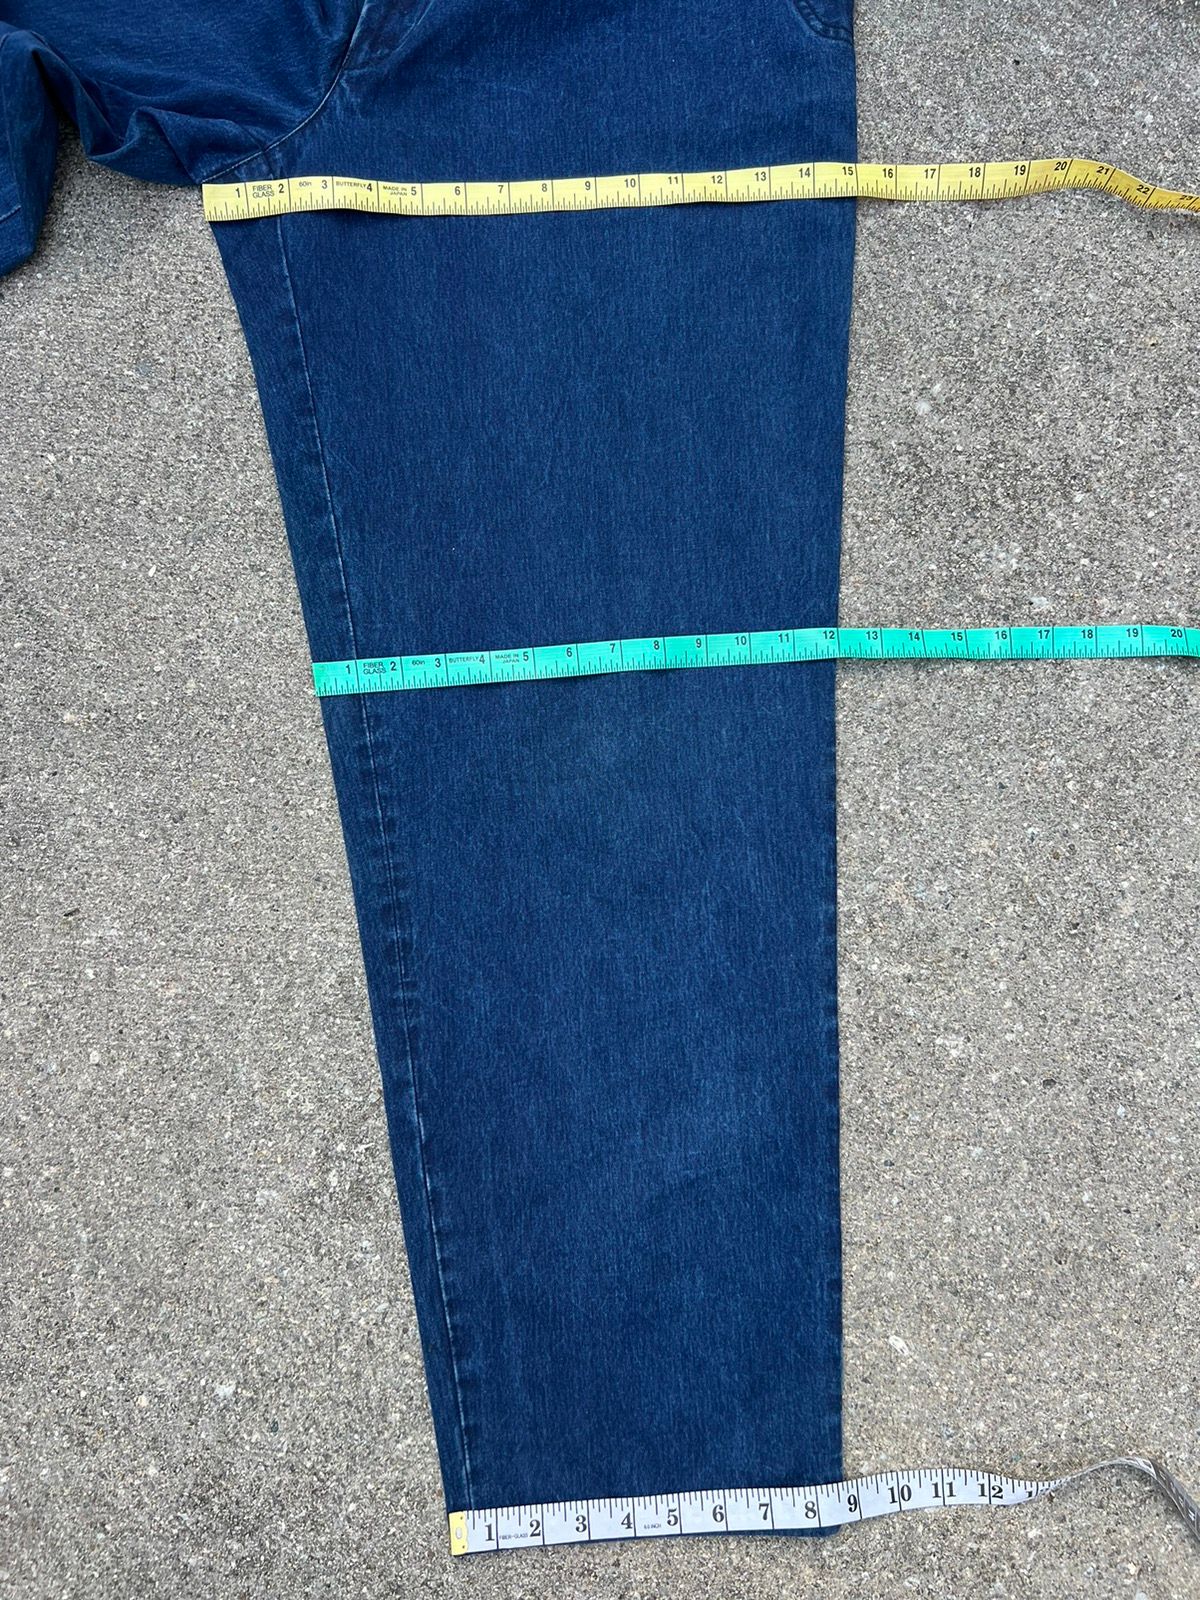 Orslow Vintage Papas Japan Sun Faded Indigo Blue Baggy Chinos Pant Size US 34 / EU 50 - 3 Thumbnail